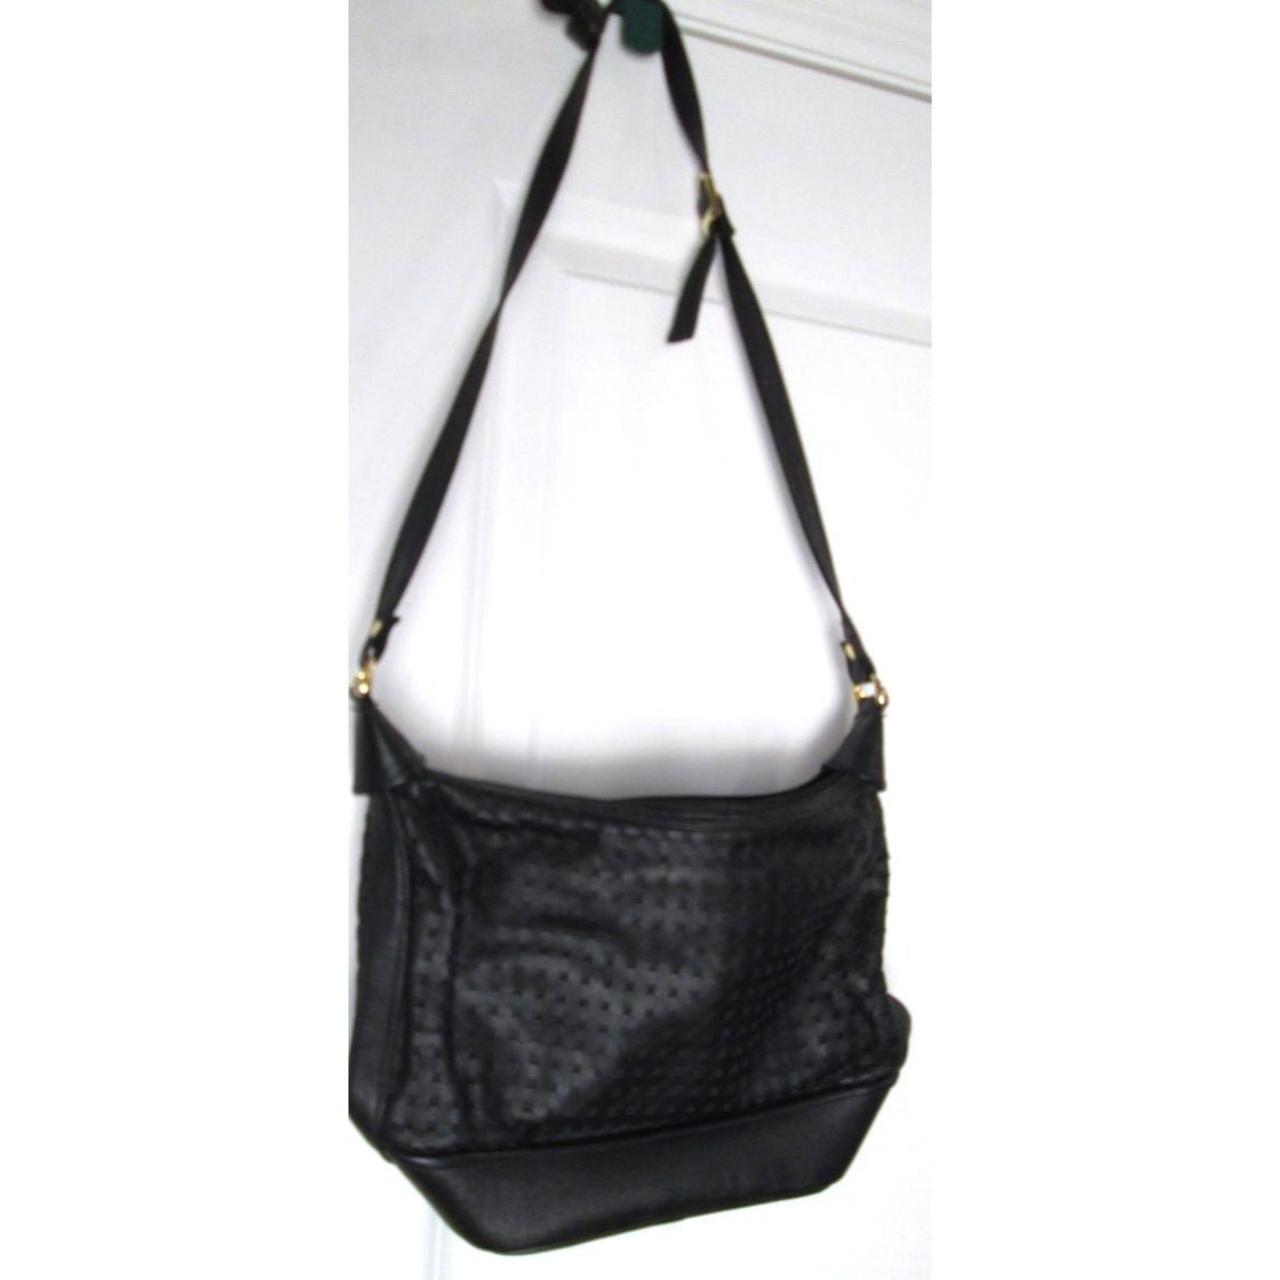 Product Image 1 - Braciano Handbag Black Basket Weave